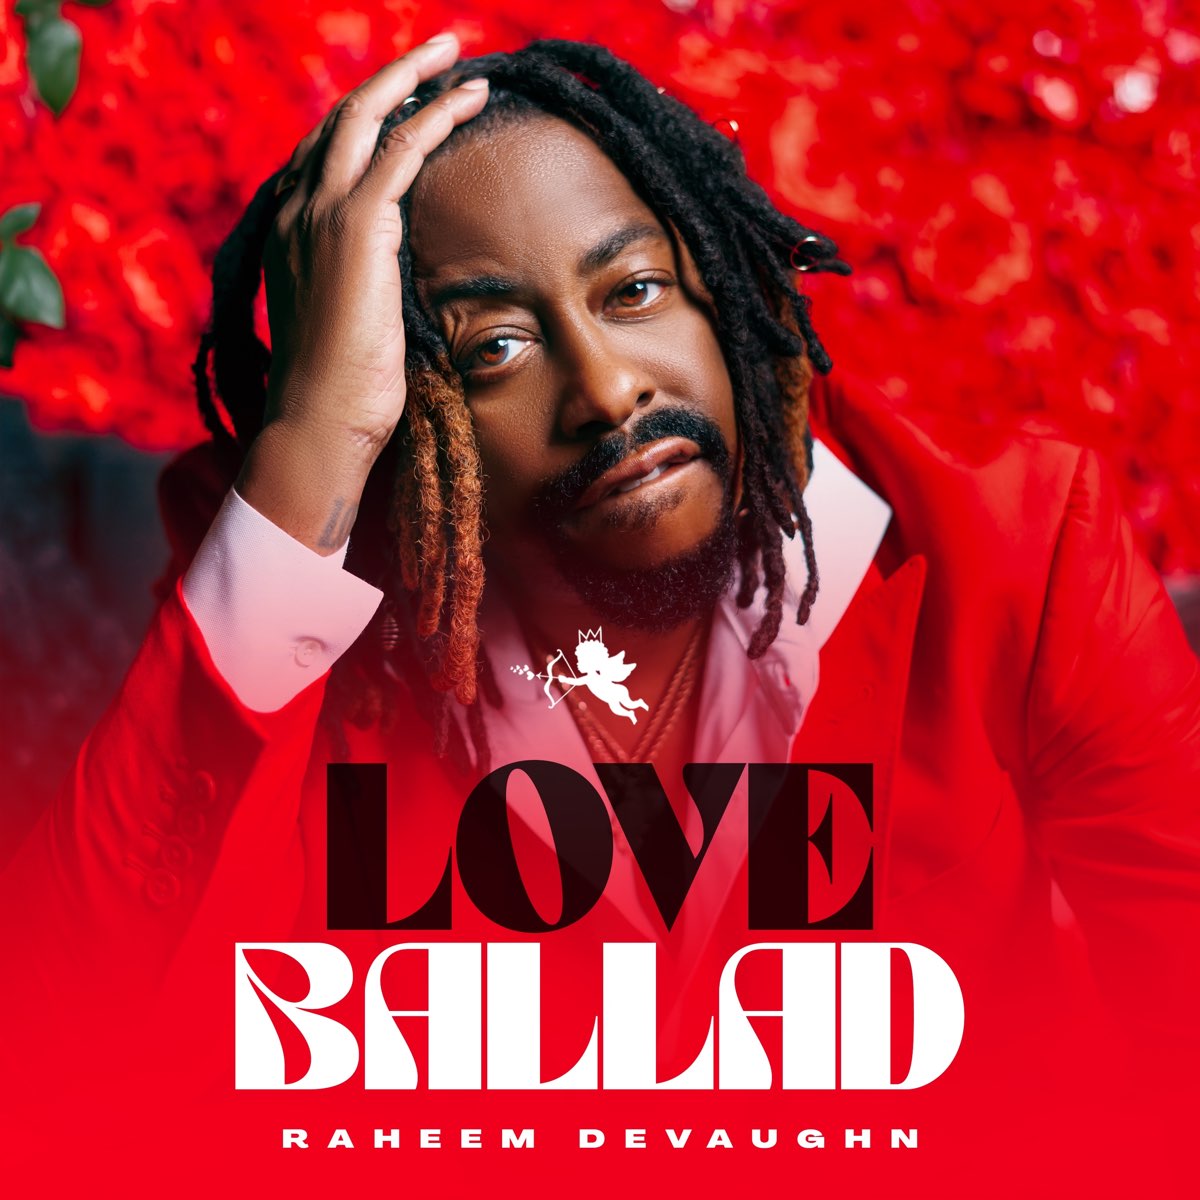 Raheem DeVaughn — Love Ballad cover artwork